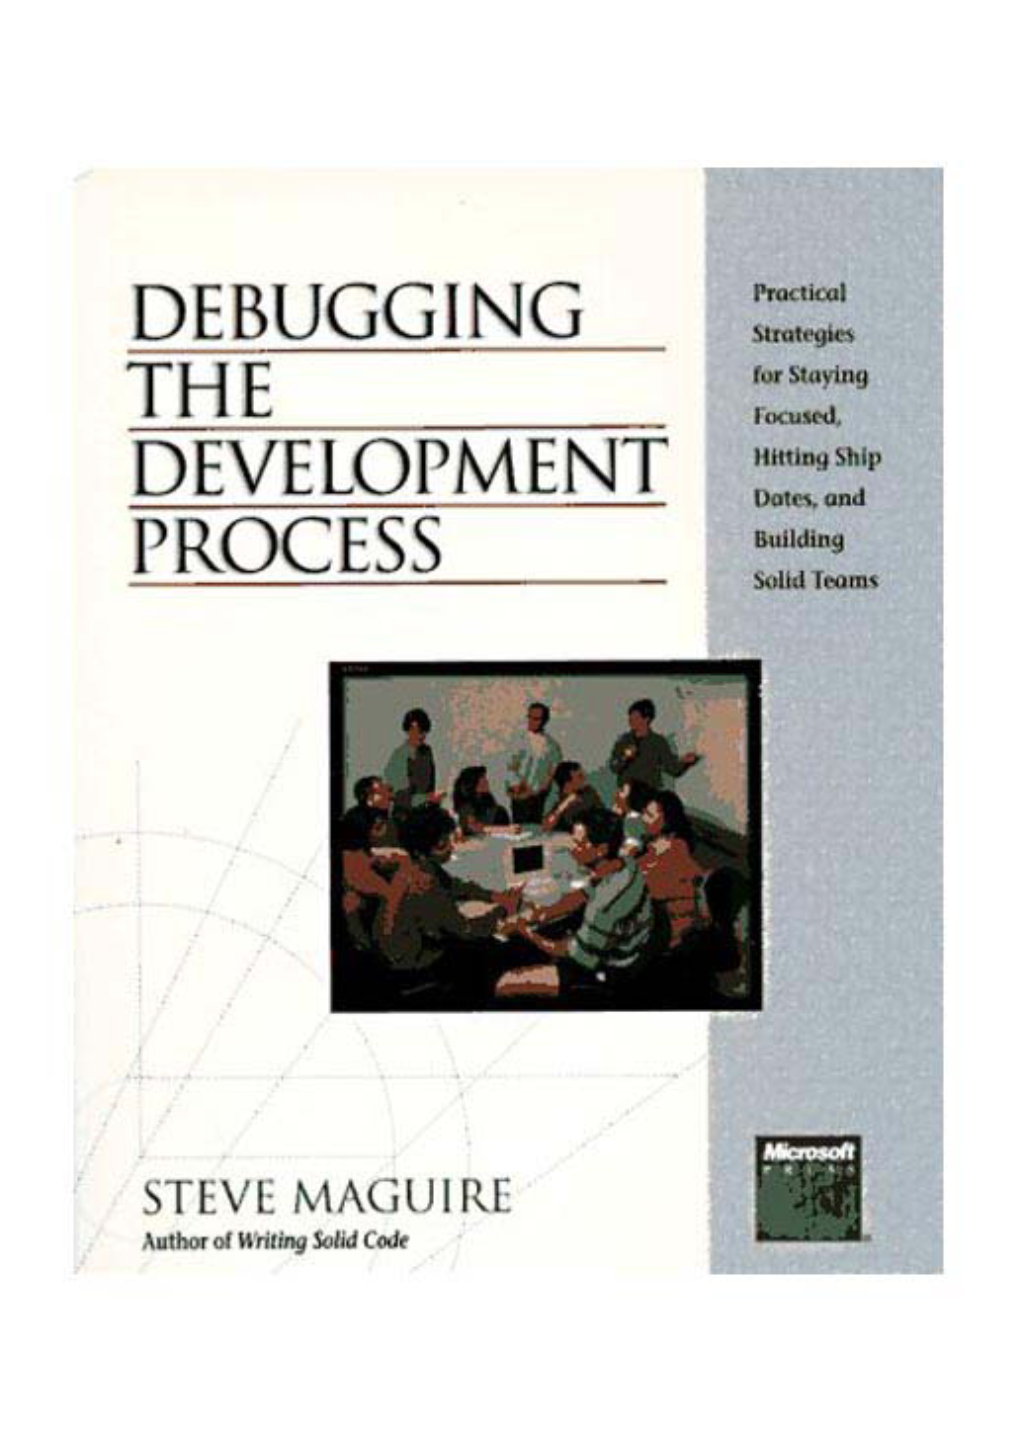 [1556156502]Debugging the Development Process.Pdf